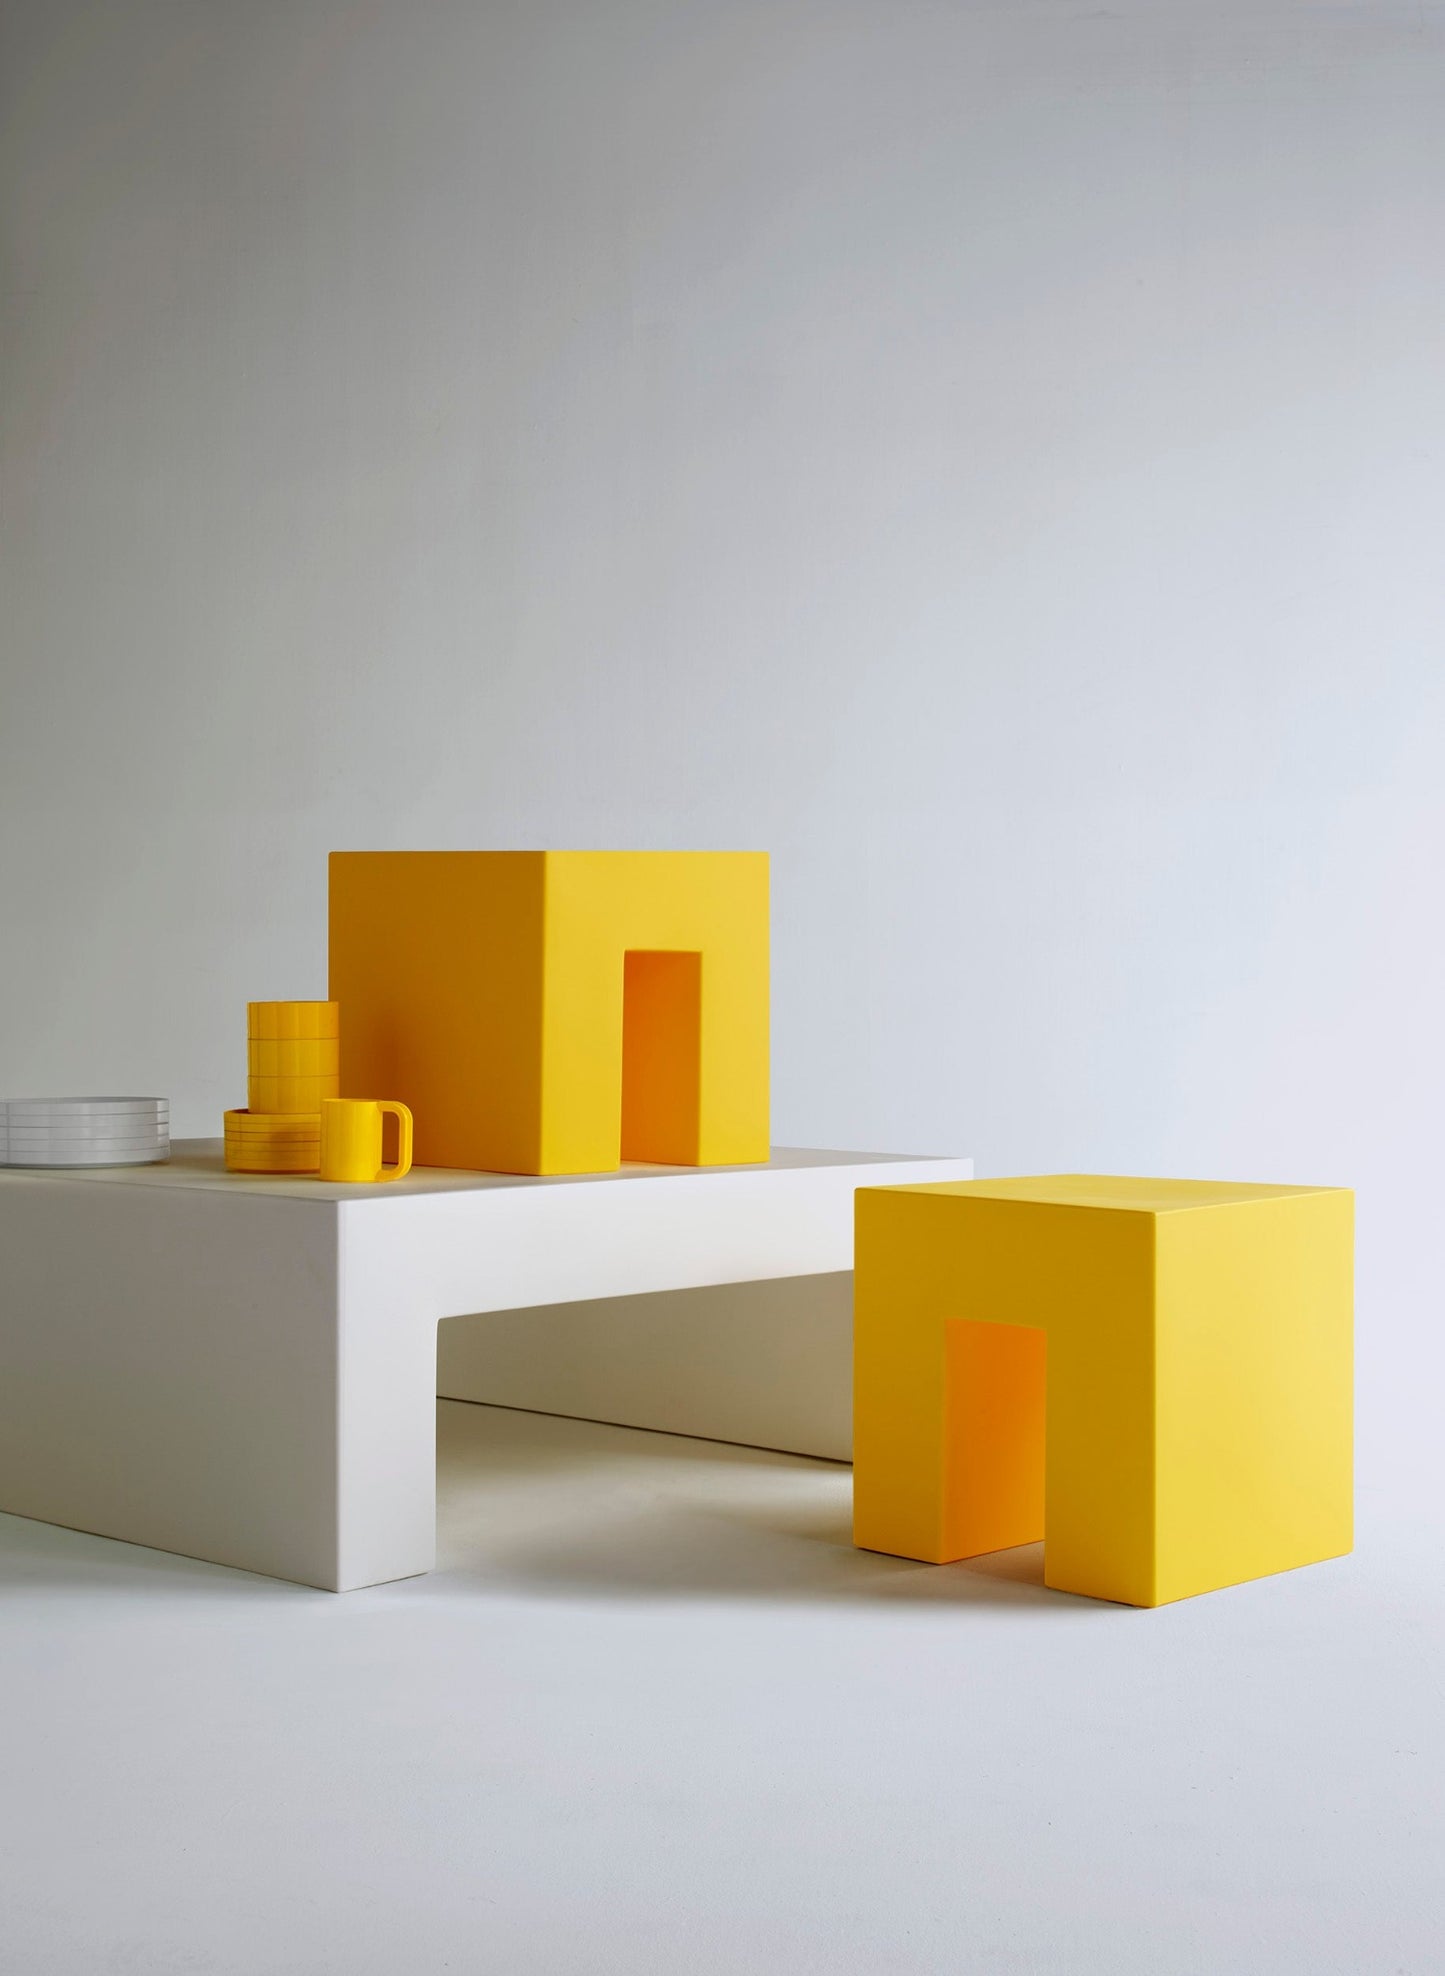 Vignelli Table, Hellerware and Vignelli Cubes